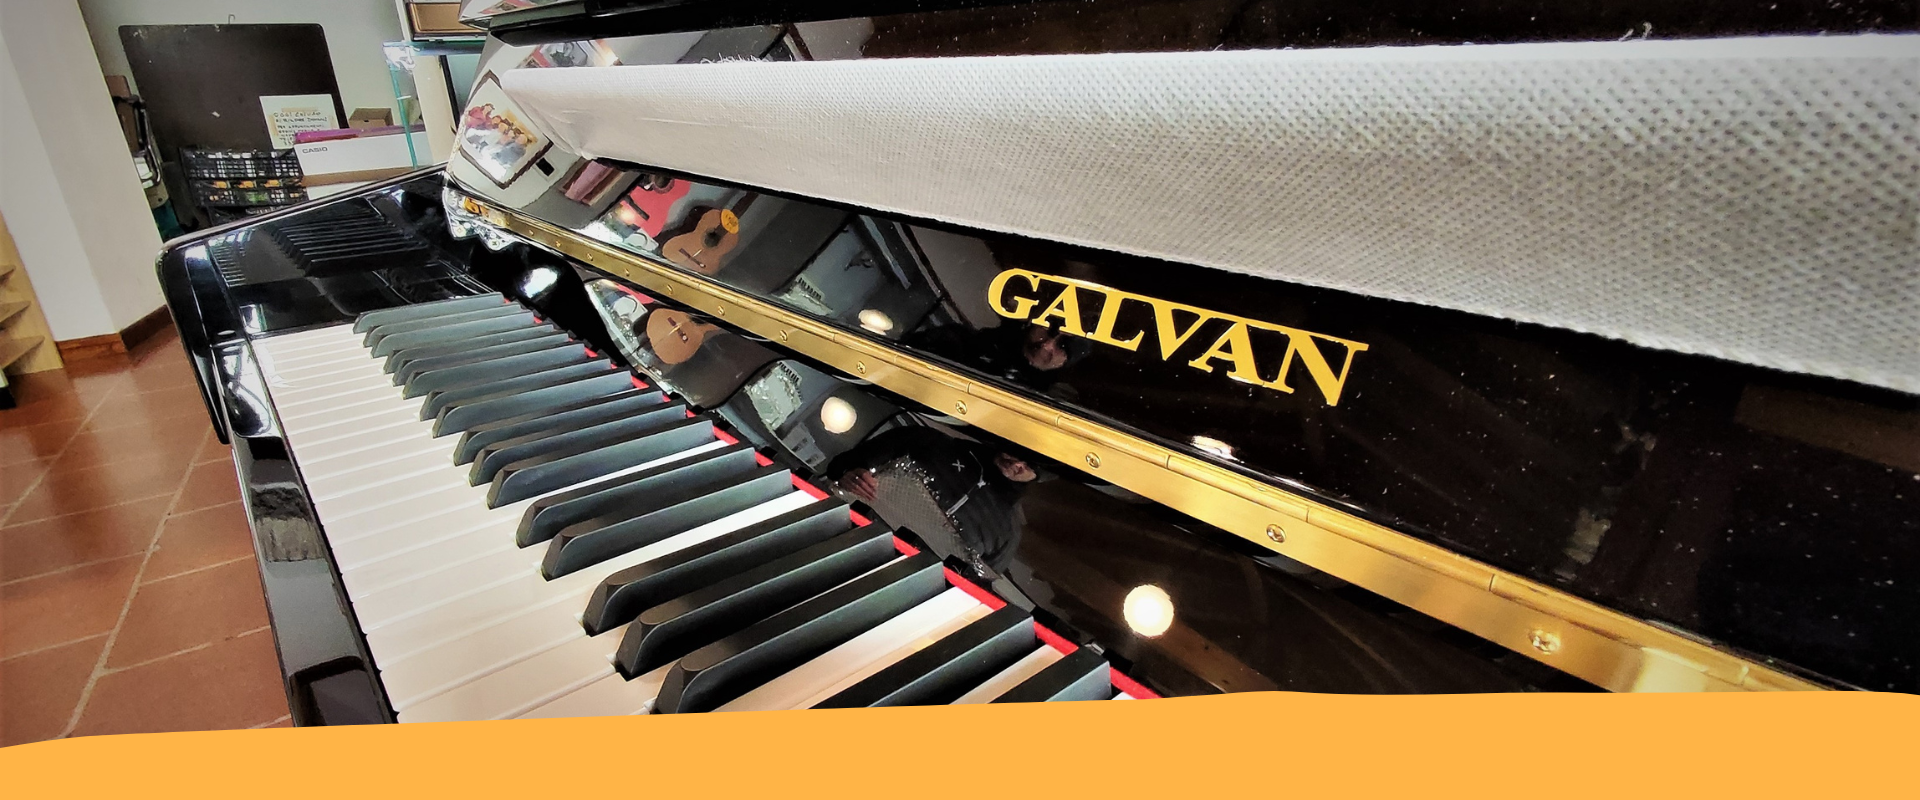 pianoforti Galvan